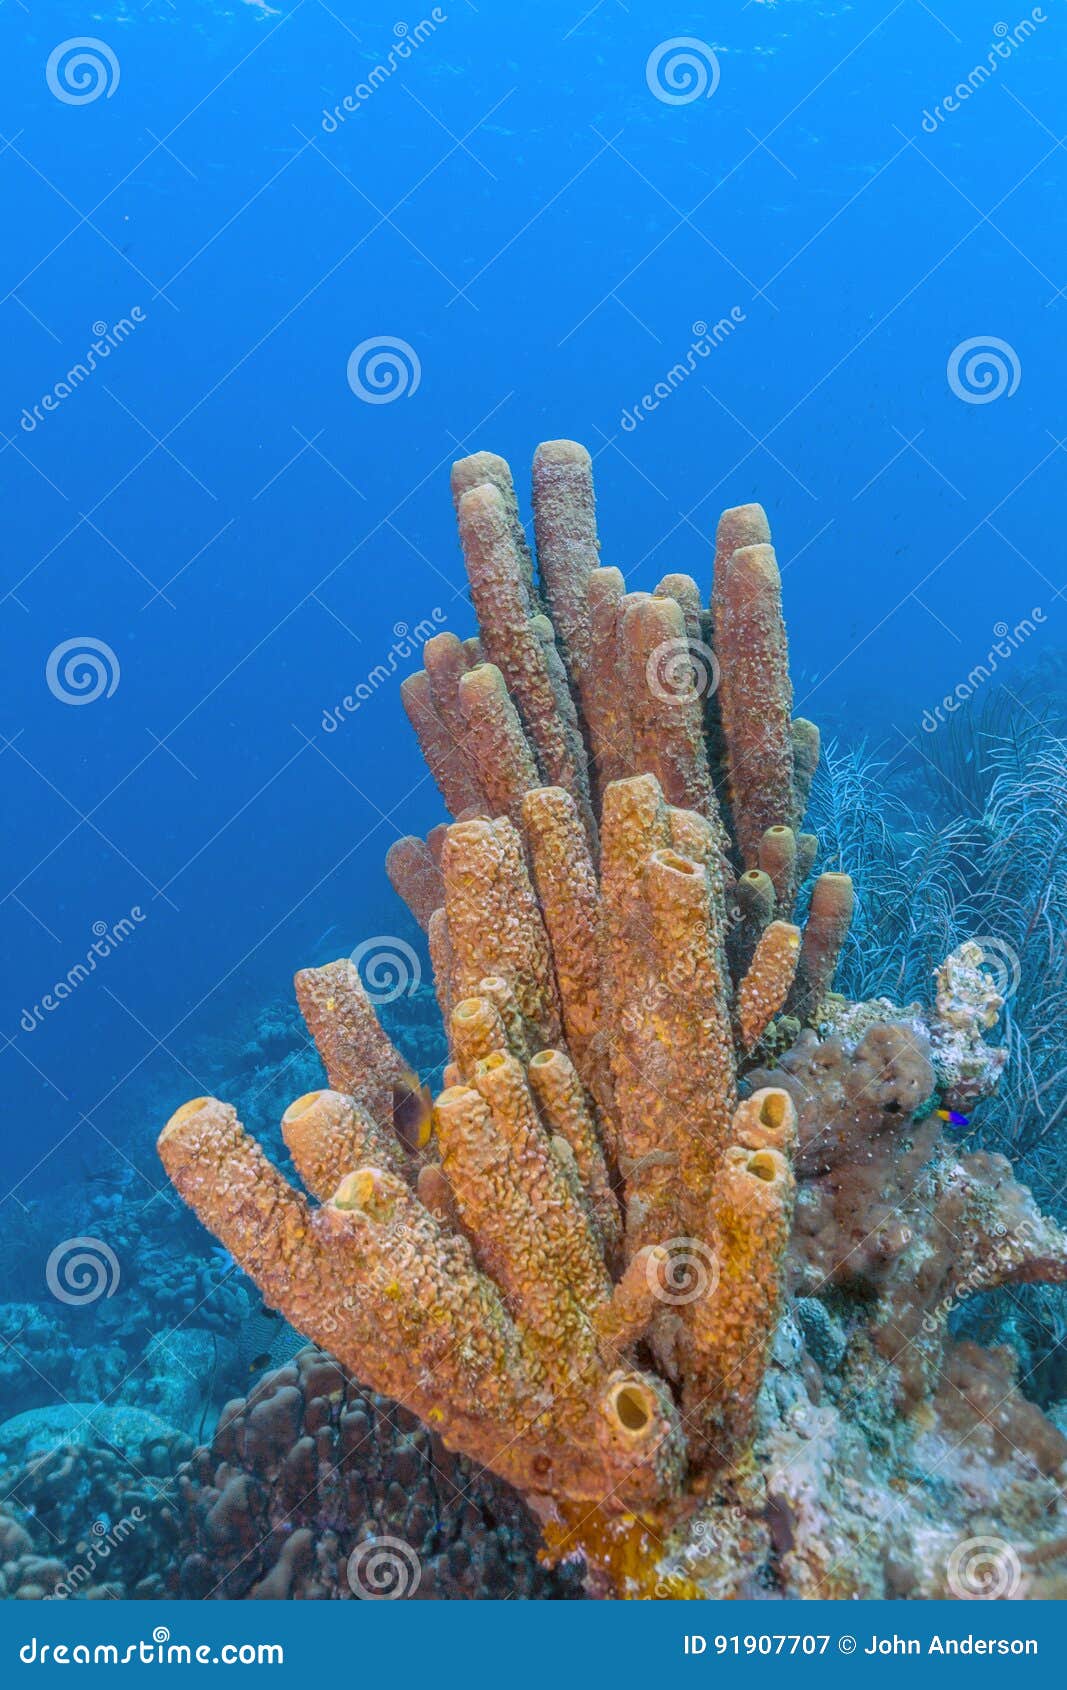 agelas conifera, brown tube sponge